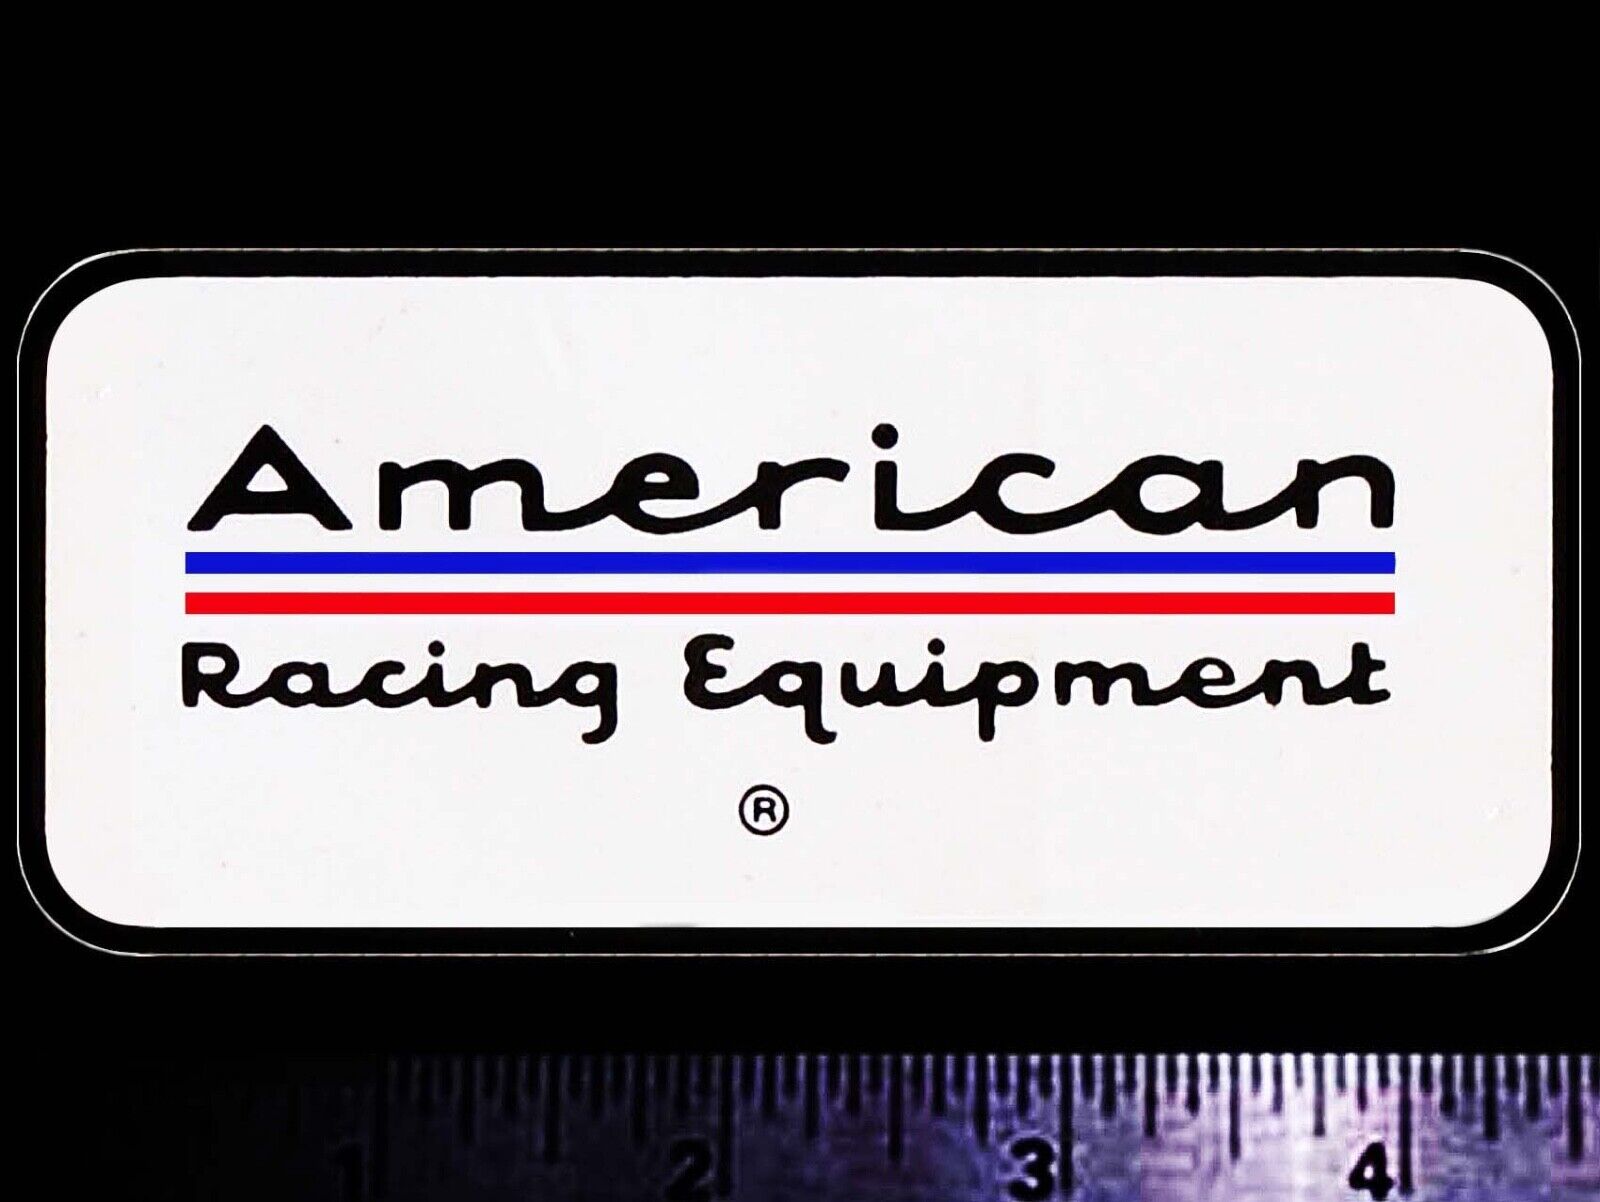 AMERICAN Racing Equipment - Original Vintage 1960's 70's Racing Decal/Sticker